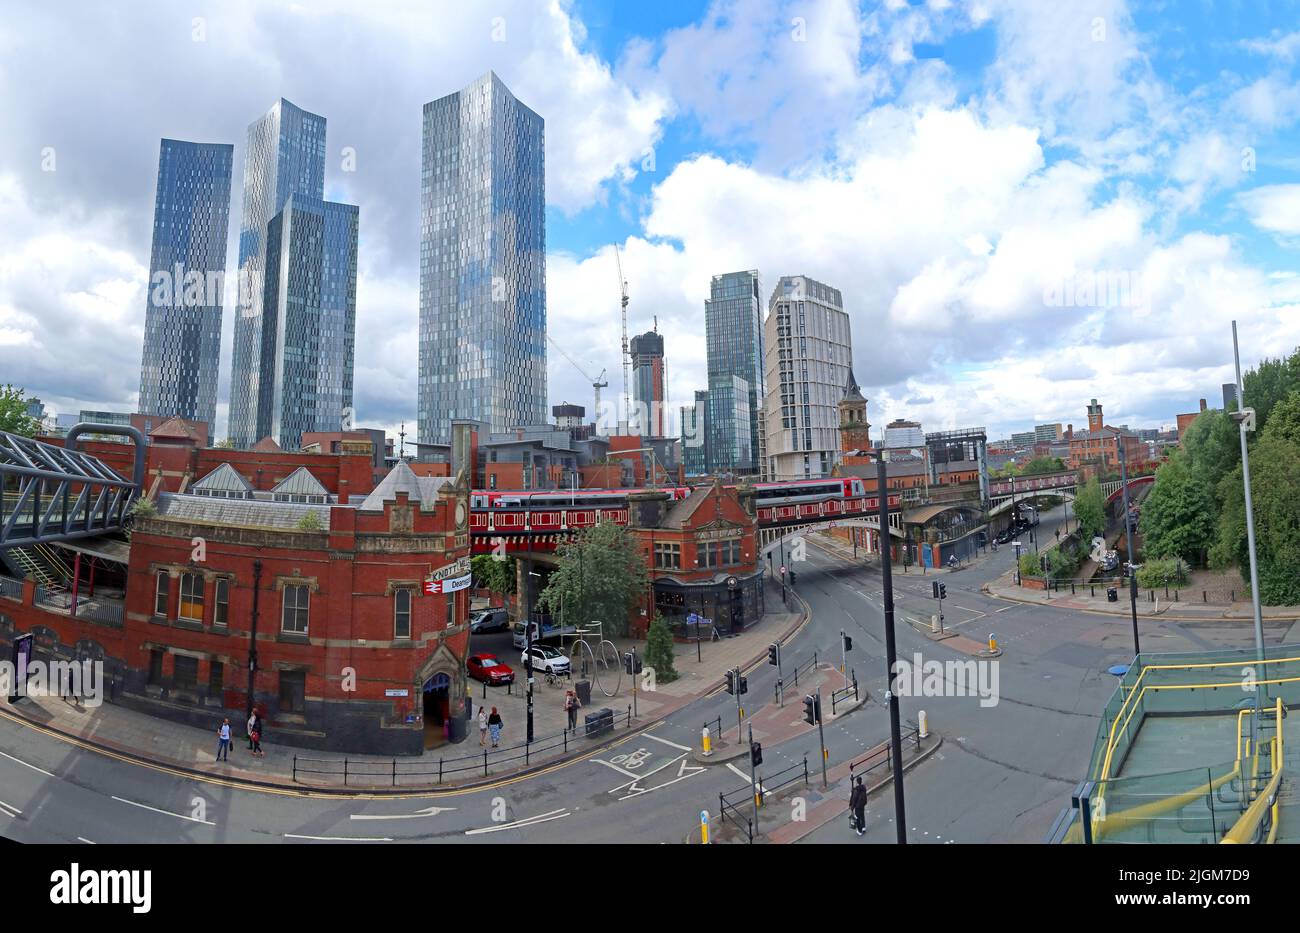 Panorama de Deansgate Castlefield, Manchester, 2 Whitworth St W, Deansgate, Locks, Manchester, Angleterre, ROYAUME-UNI, M1 5LH Banque D'Images